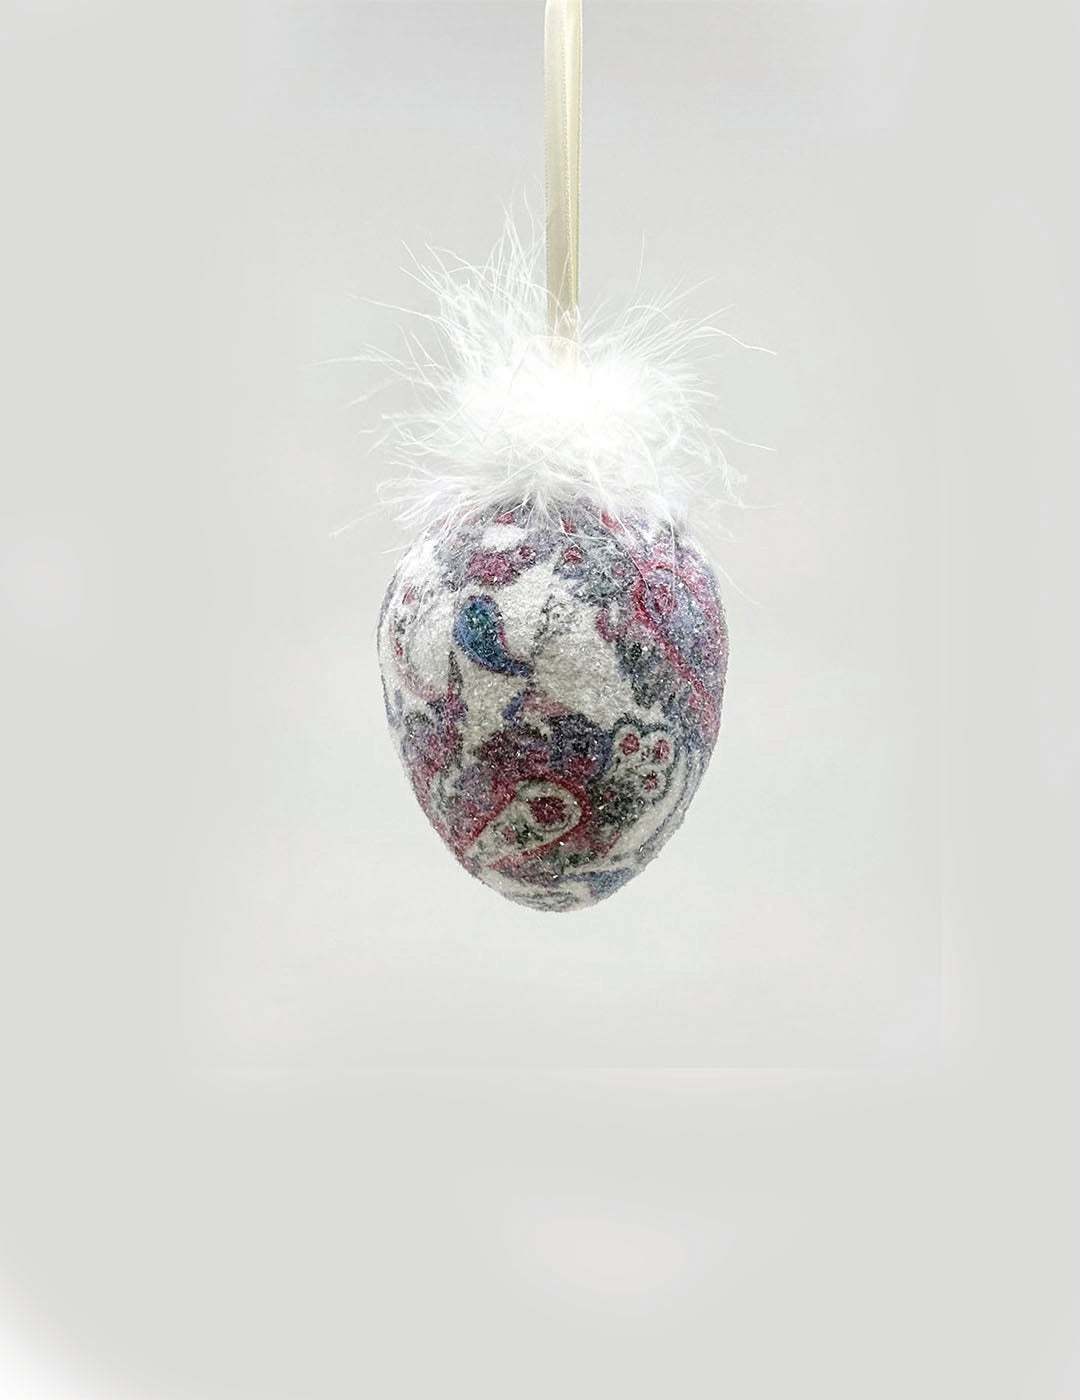 Decoupage Egg Ornament - Small, Multi-Color Paisley